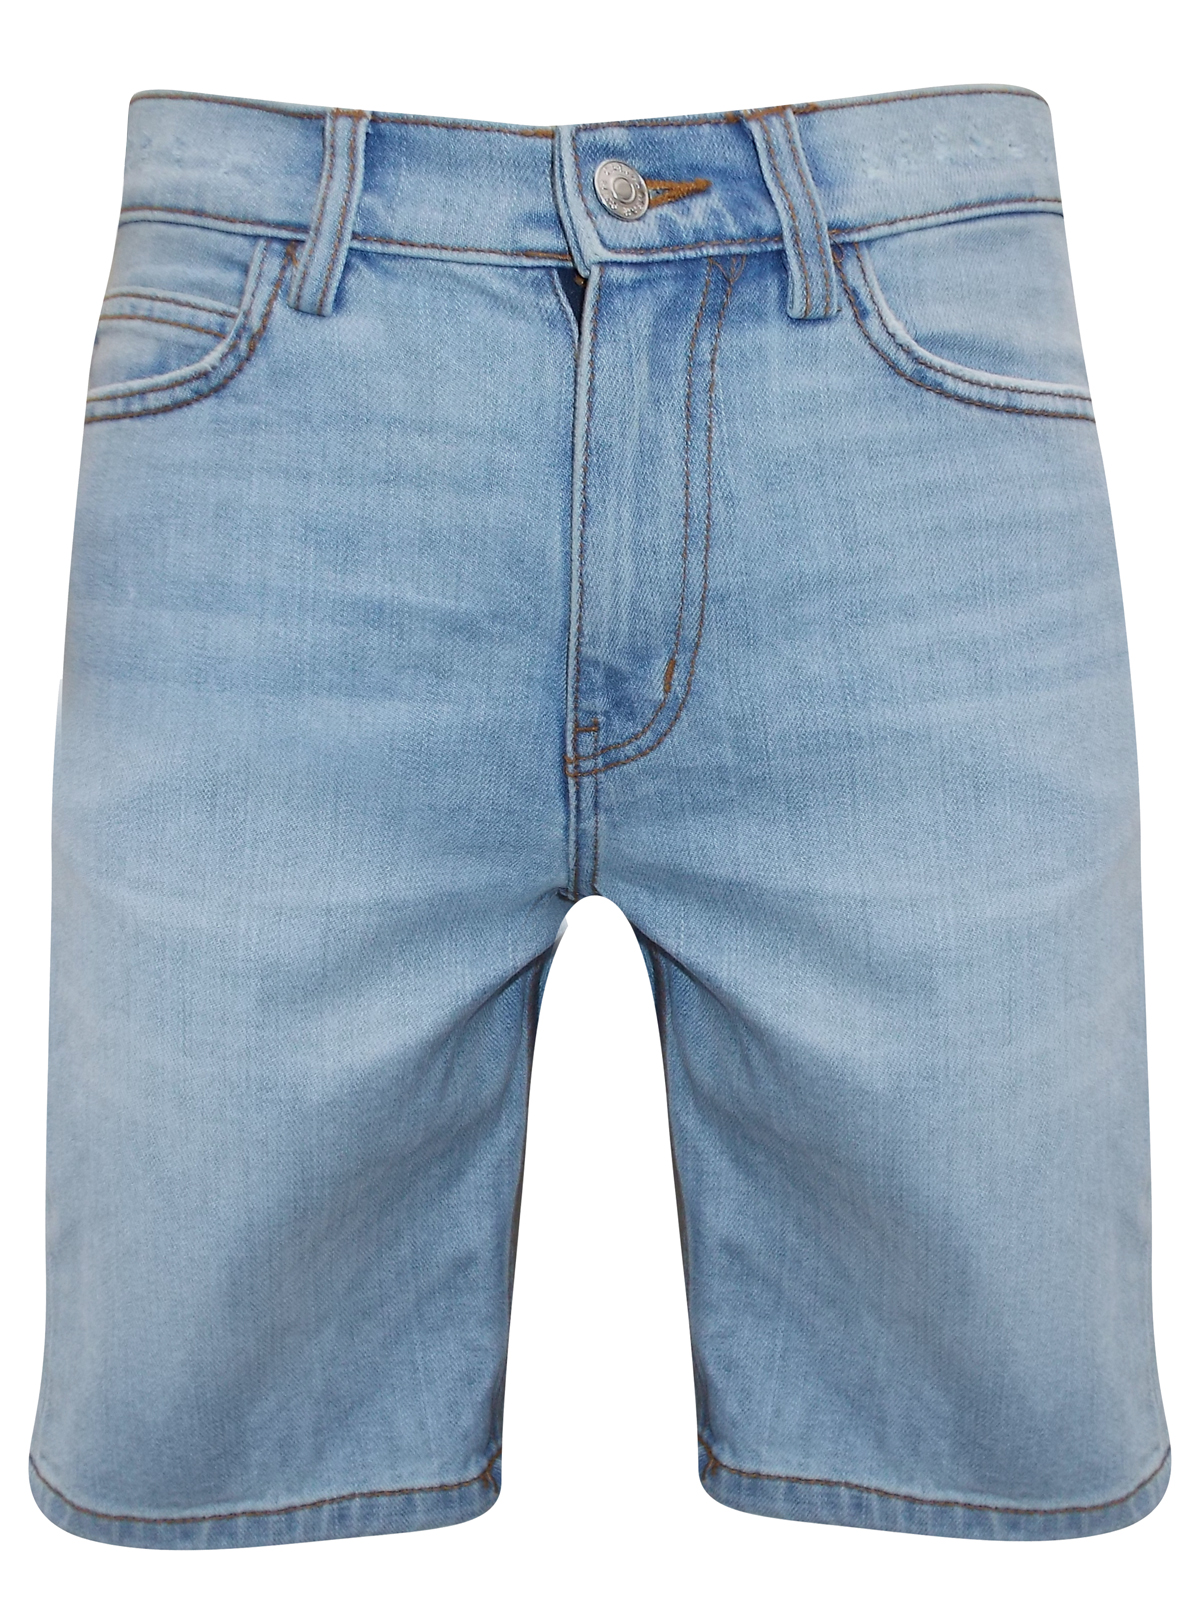 M4ngo LIGHT-DENIM Cotton Rich 5-Pocket Denim Shorts - Waist Size 28 to 36